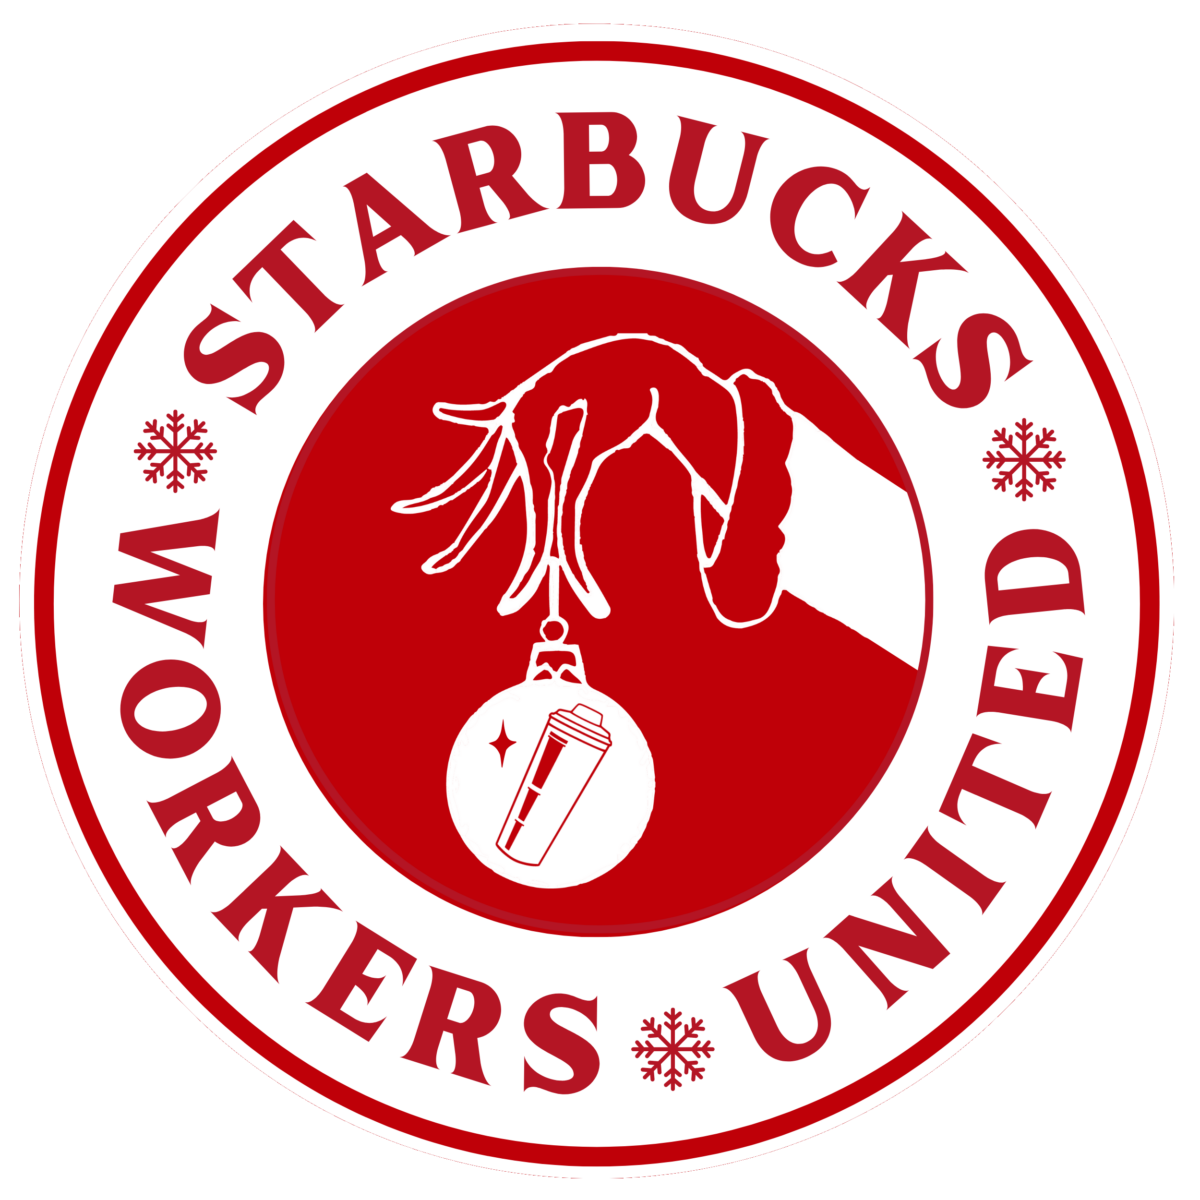 Don't miss Red Cup Day at Starbucks! #starbucks #starbucksdrinks